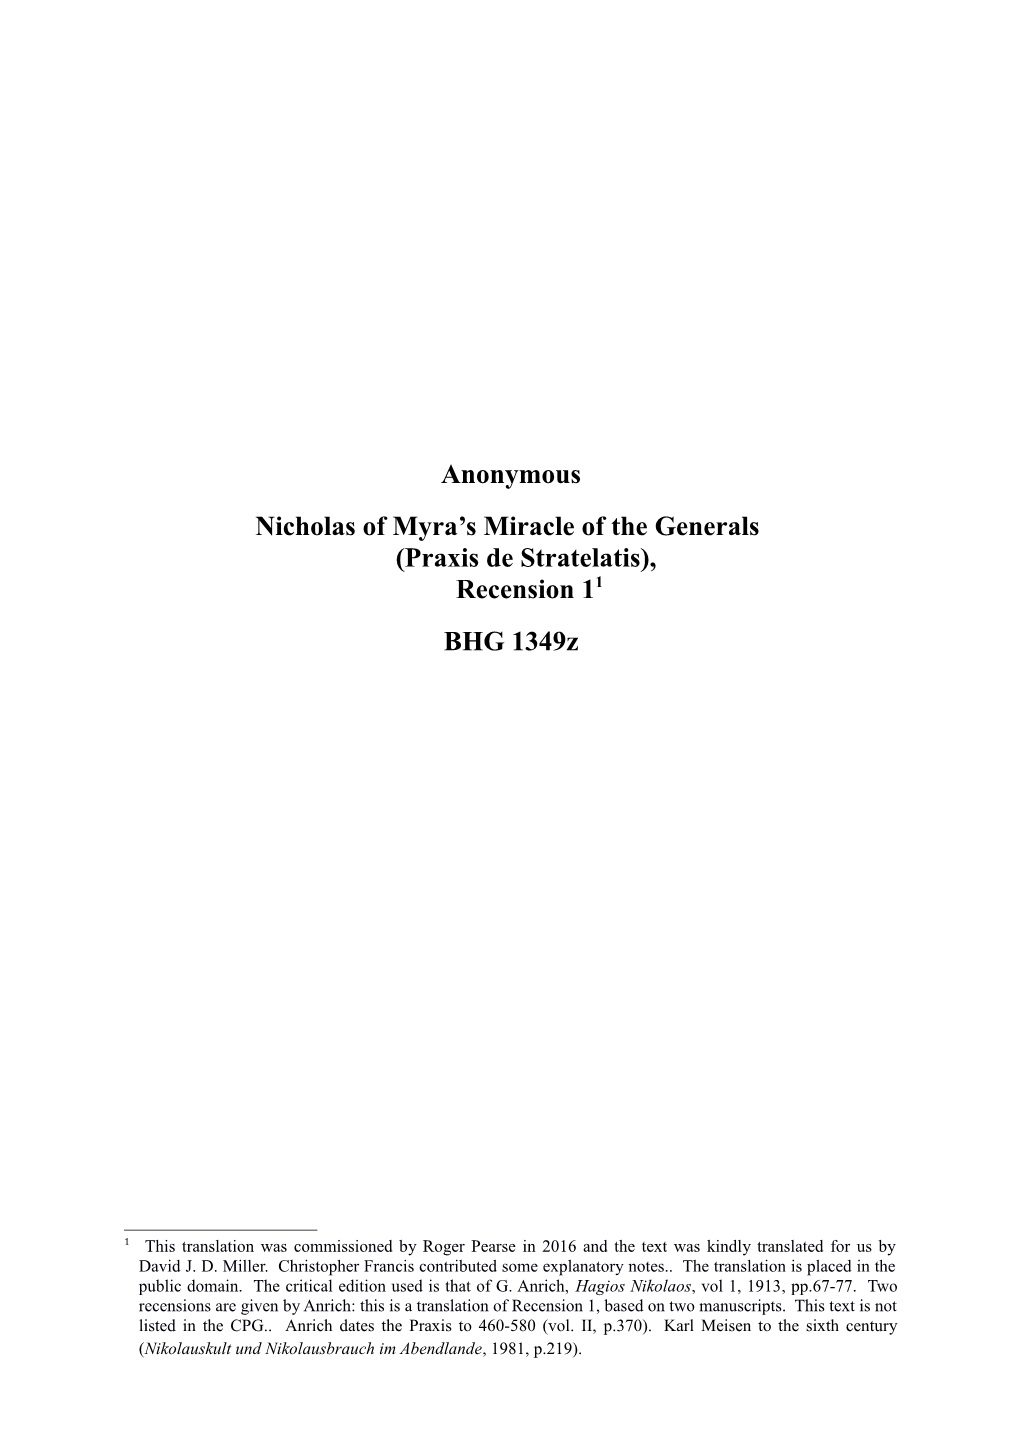 Nicholas of Myra S Miracle of the Generals(Praxis De Stratelatis), Recension 1 1